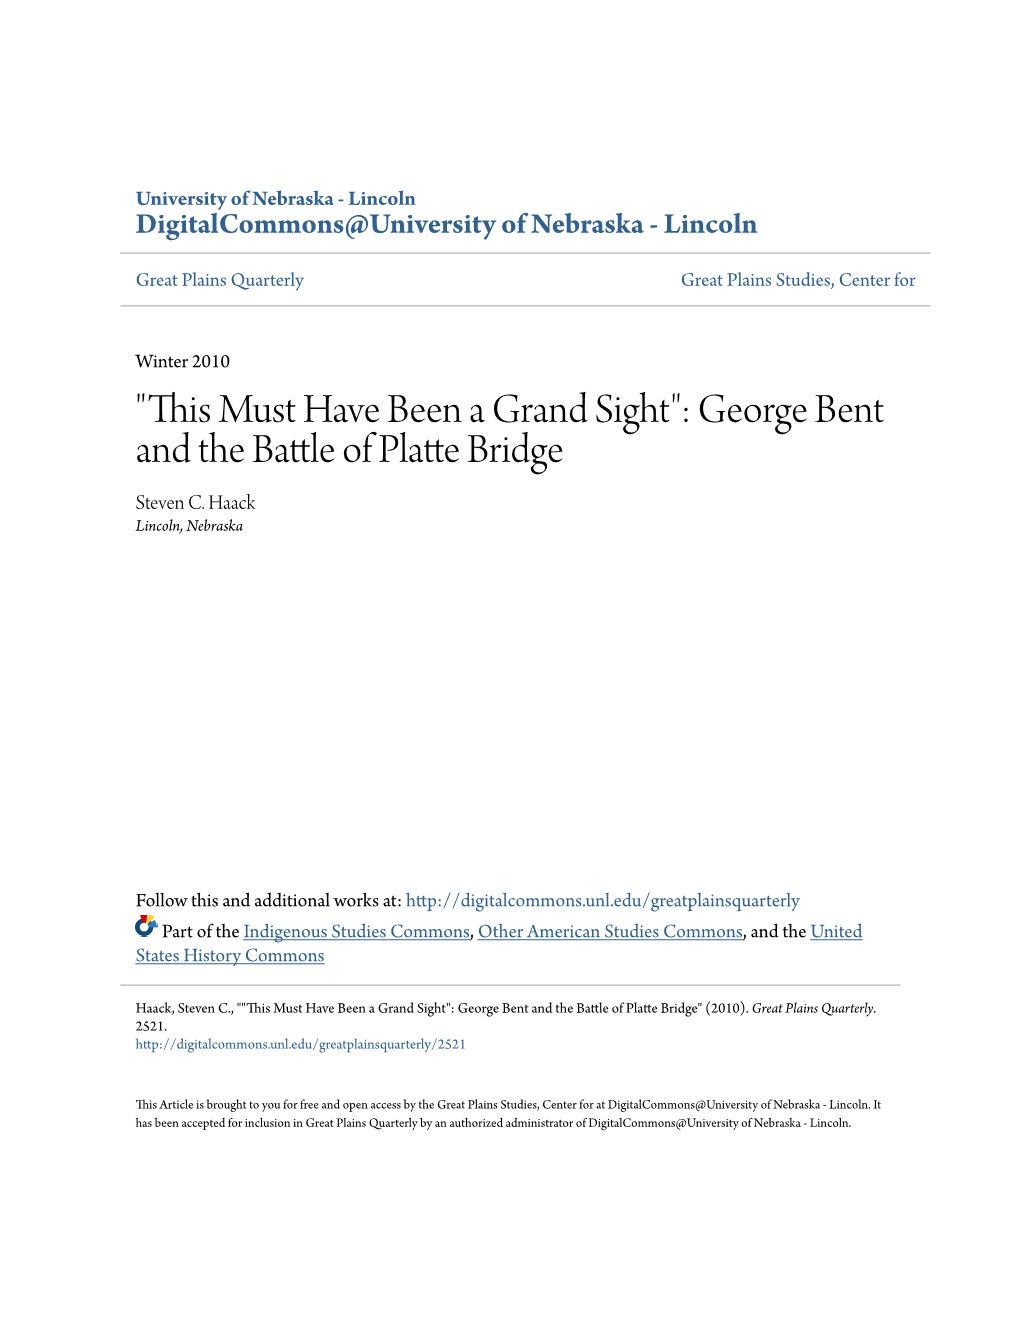 George Bent and the Battle of Platte Bridge